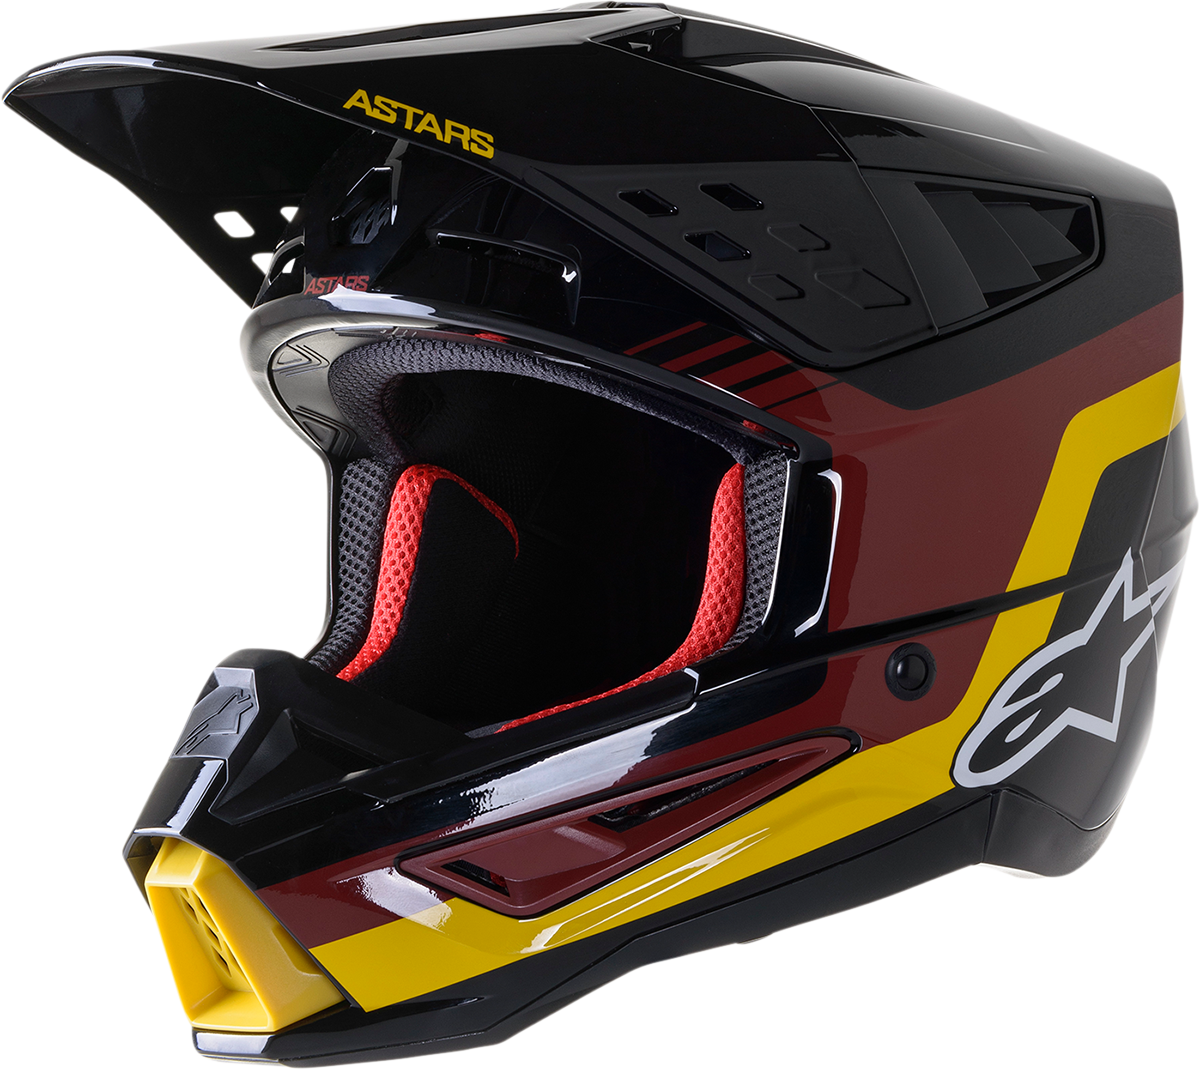 ALPINESTARS SM5 Helmet - Venture - Black/Bordeaux/Yellow/Glossy - Medium 8305122-1358-MD